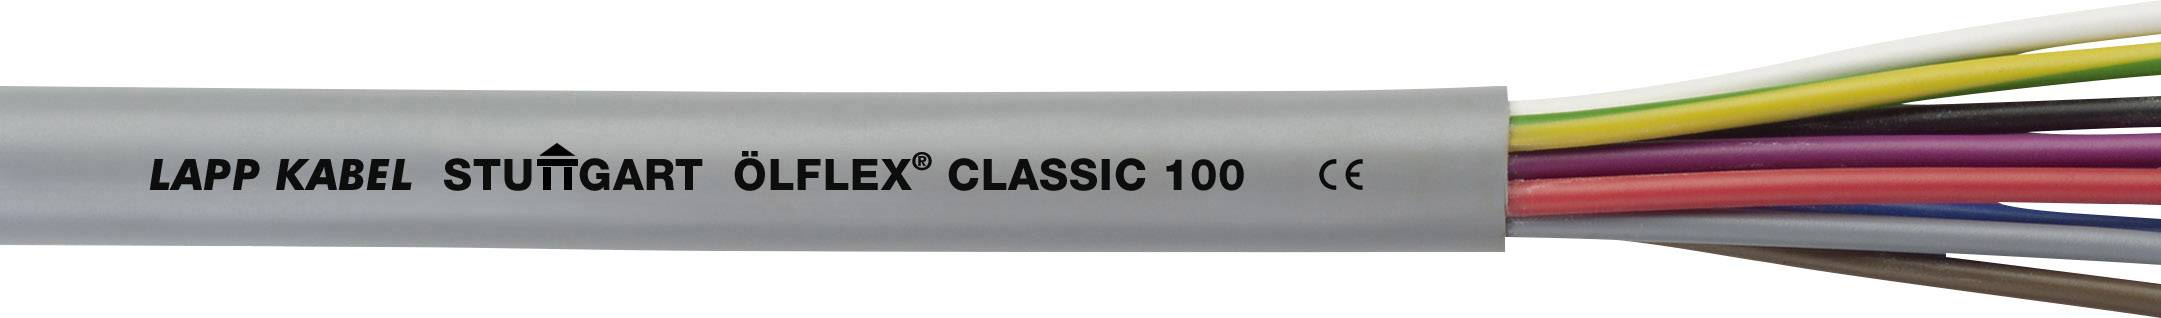 LAPP KABEL Steuerleitung ÖLFLEX® CLASSIC 100 5 G 6 mm² Grau LappKabel 1120812/1000 1000 m